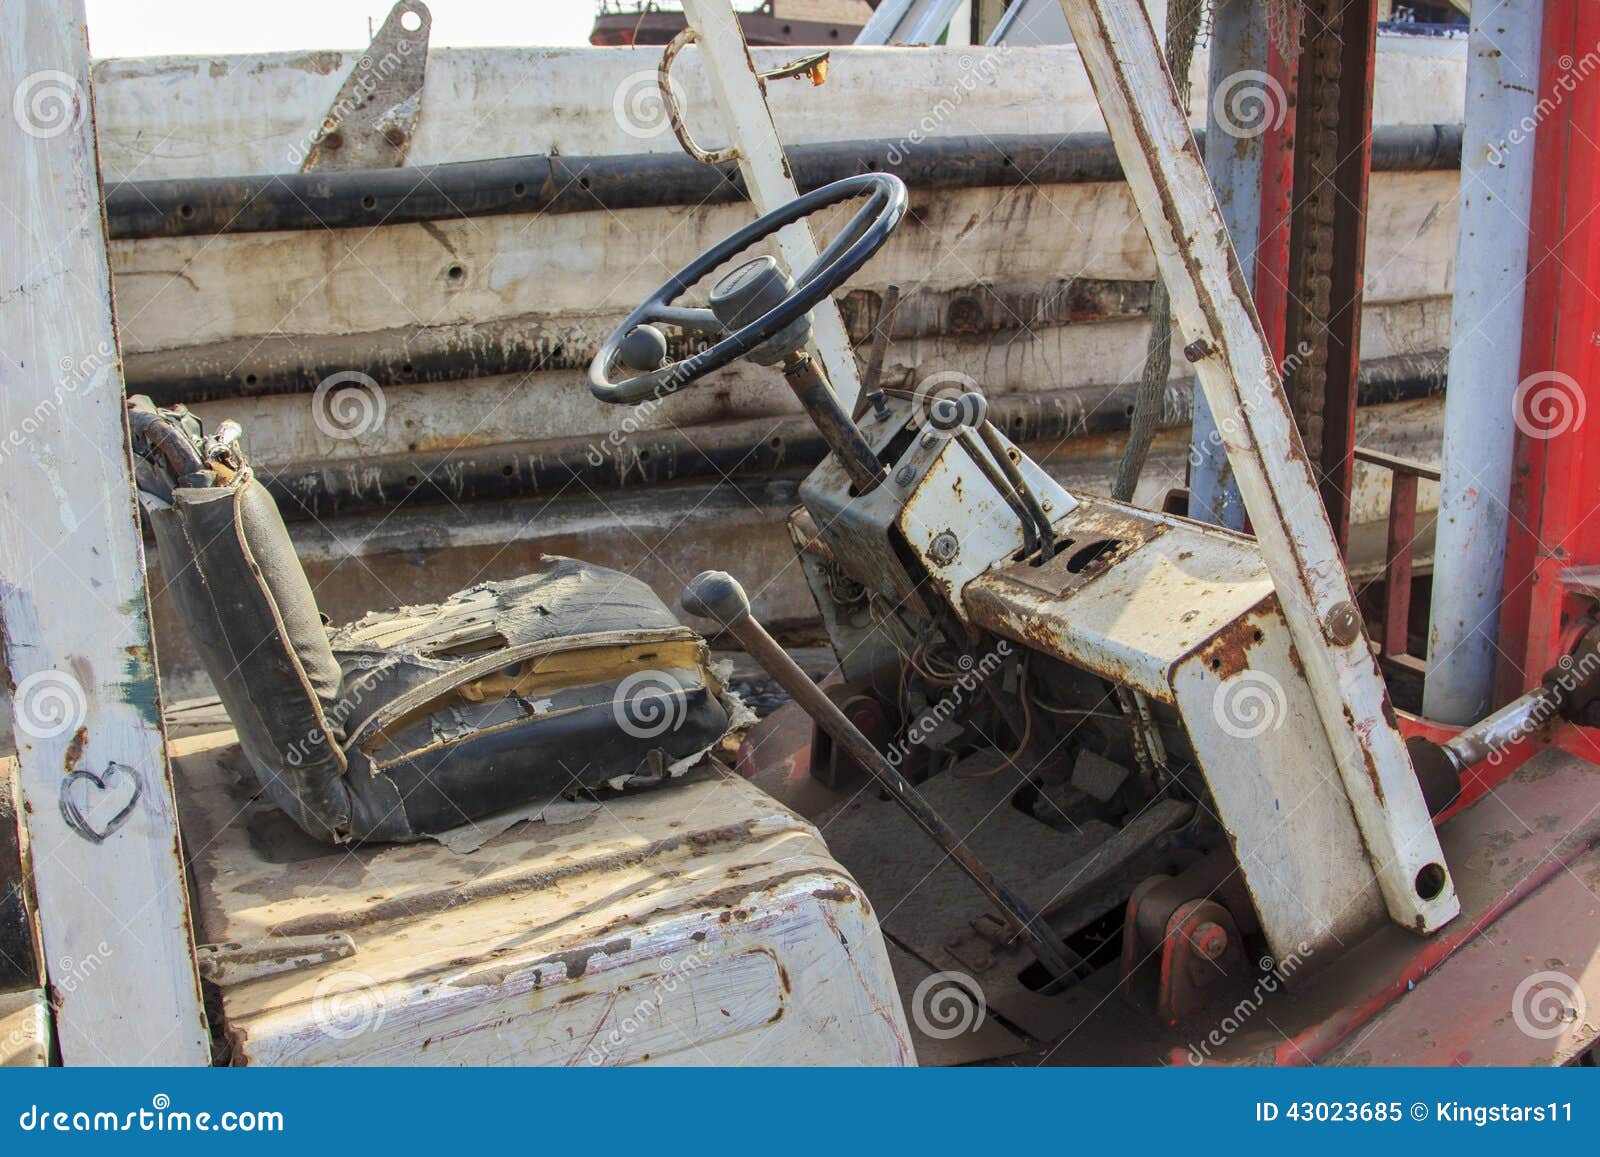 Broken Forklift Truck In Yard Old Forklift Stock Image Image Of Pallet Rusty 43023685